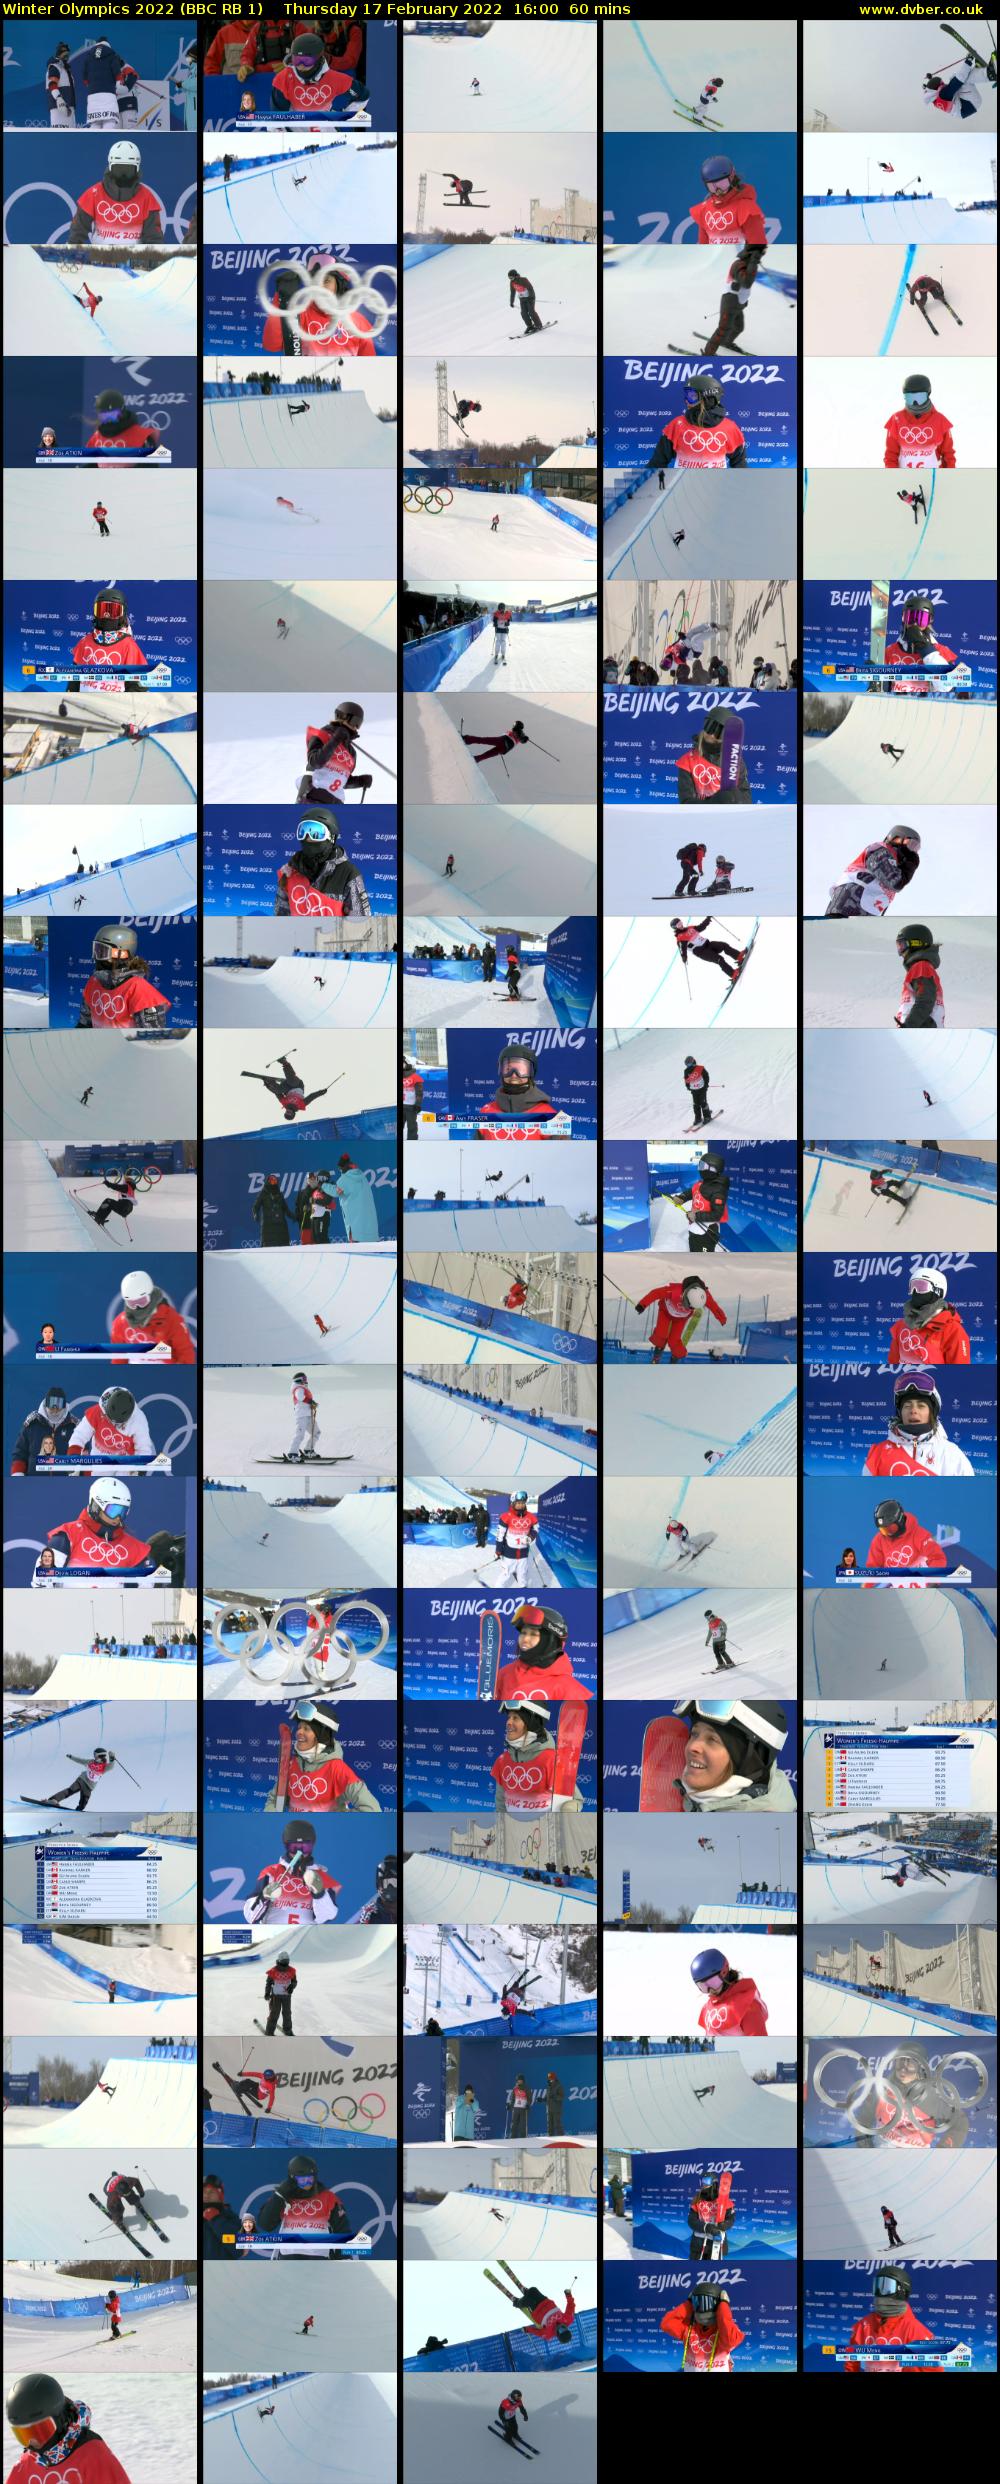 Winter Olympics 2022 (BBC RB 1) Thursday 17 February 2022 16:00 - 17:00